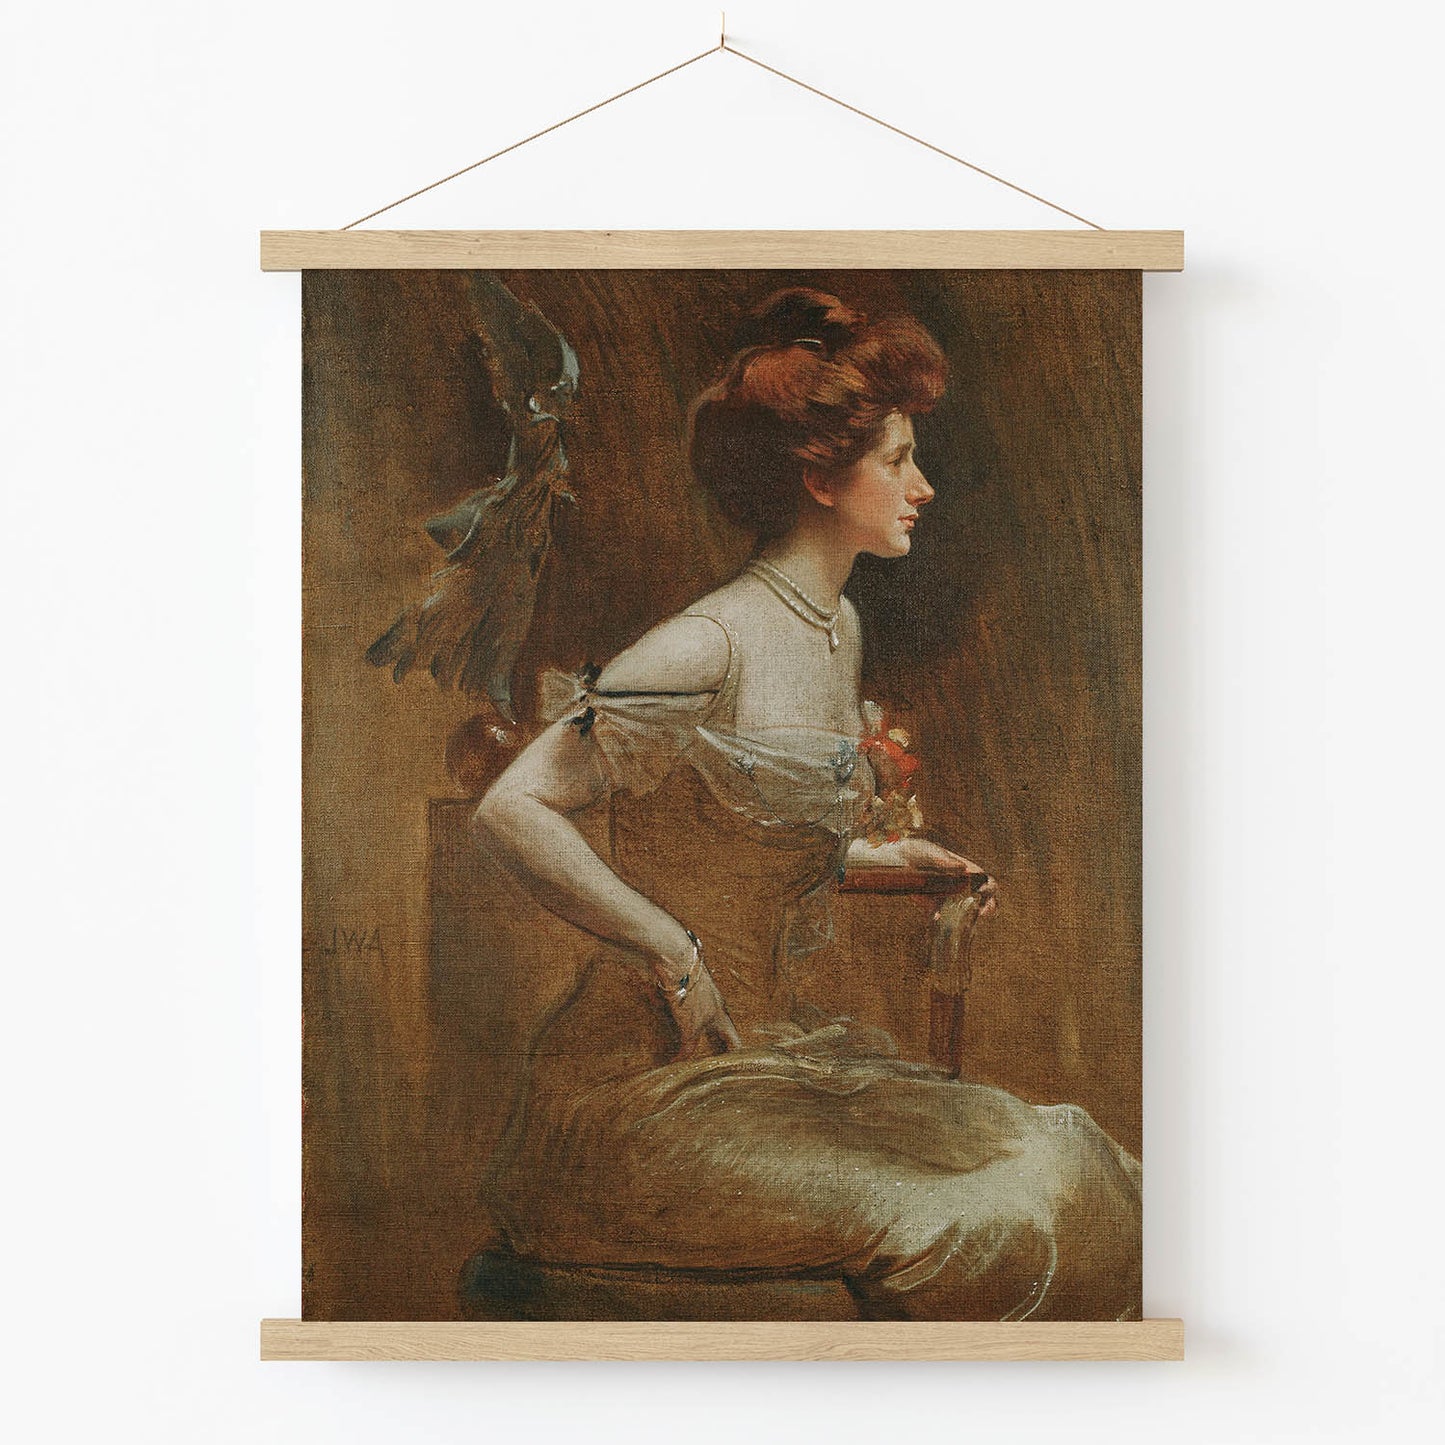 Woman in Tan Hues Art Print in Wood Hanger Frame on Wall